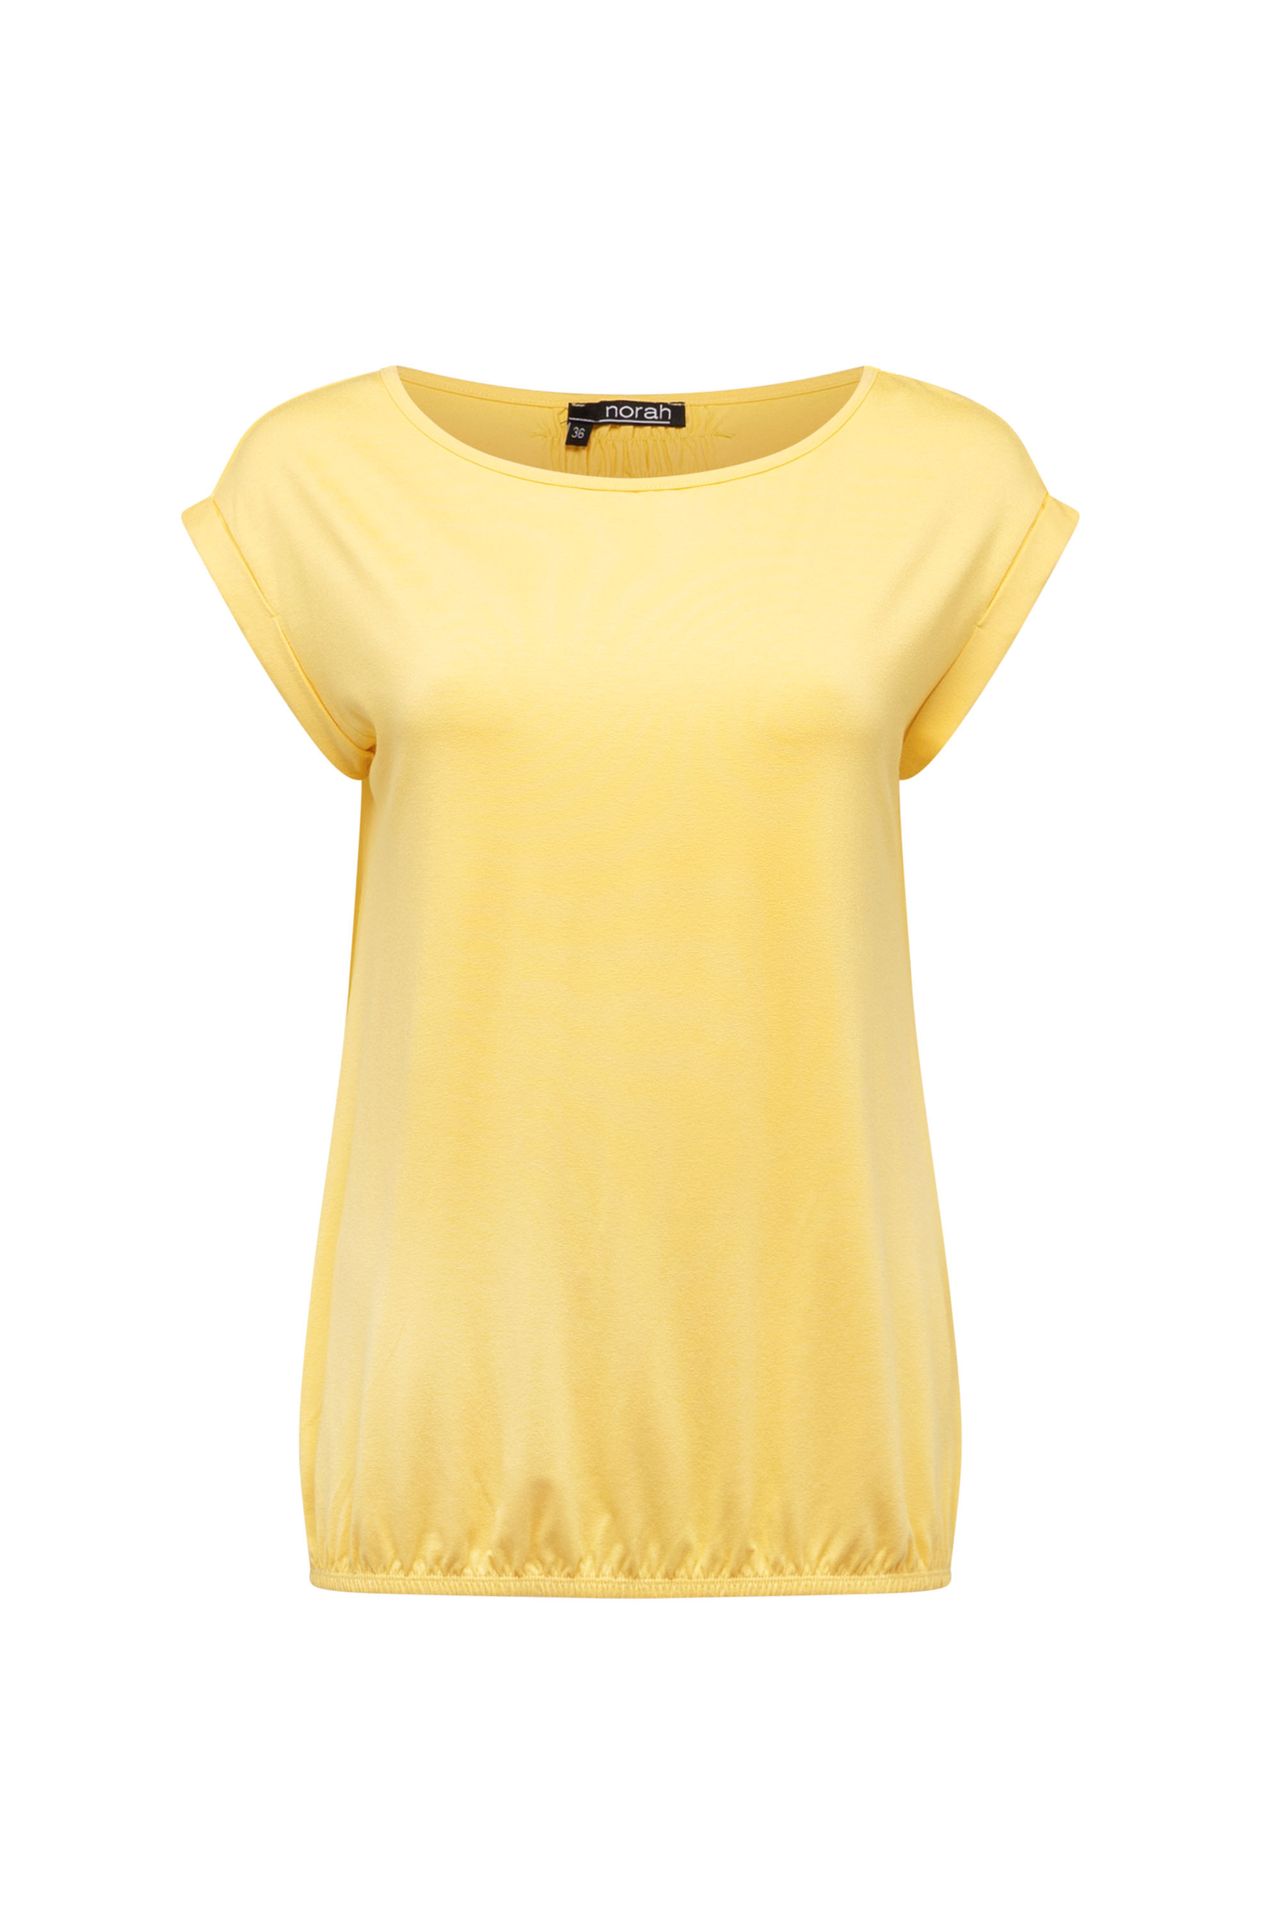 Norah Shirt Marije geel yellow 203656-300